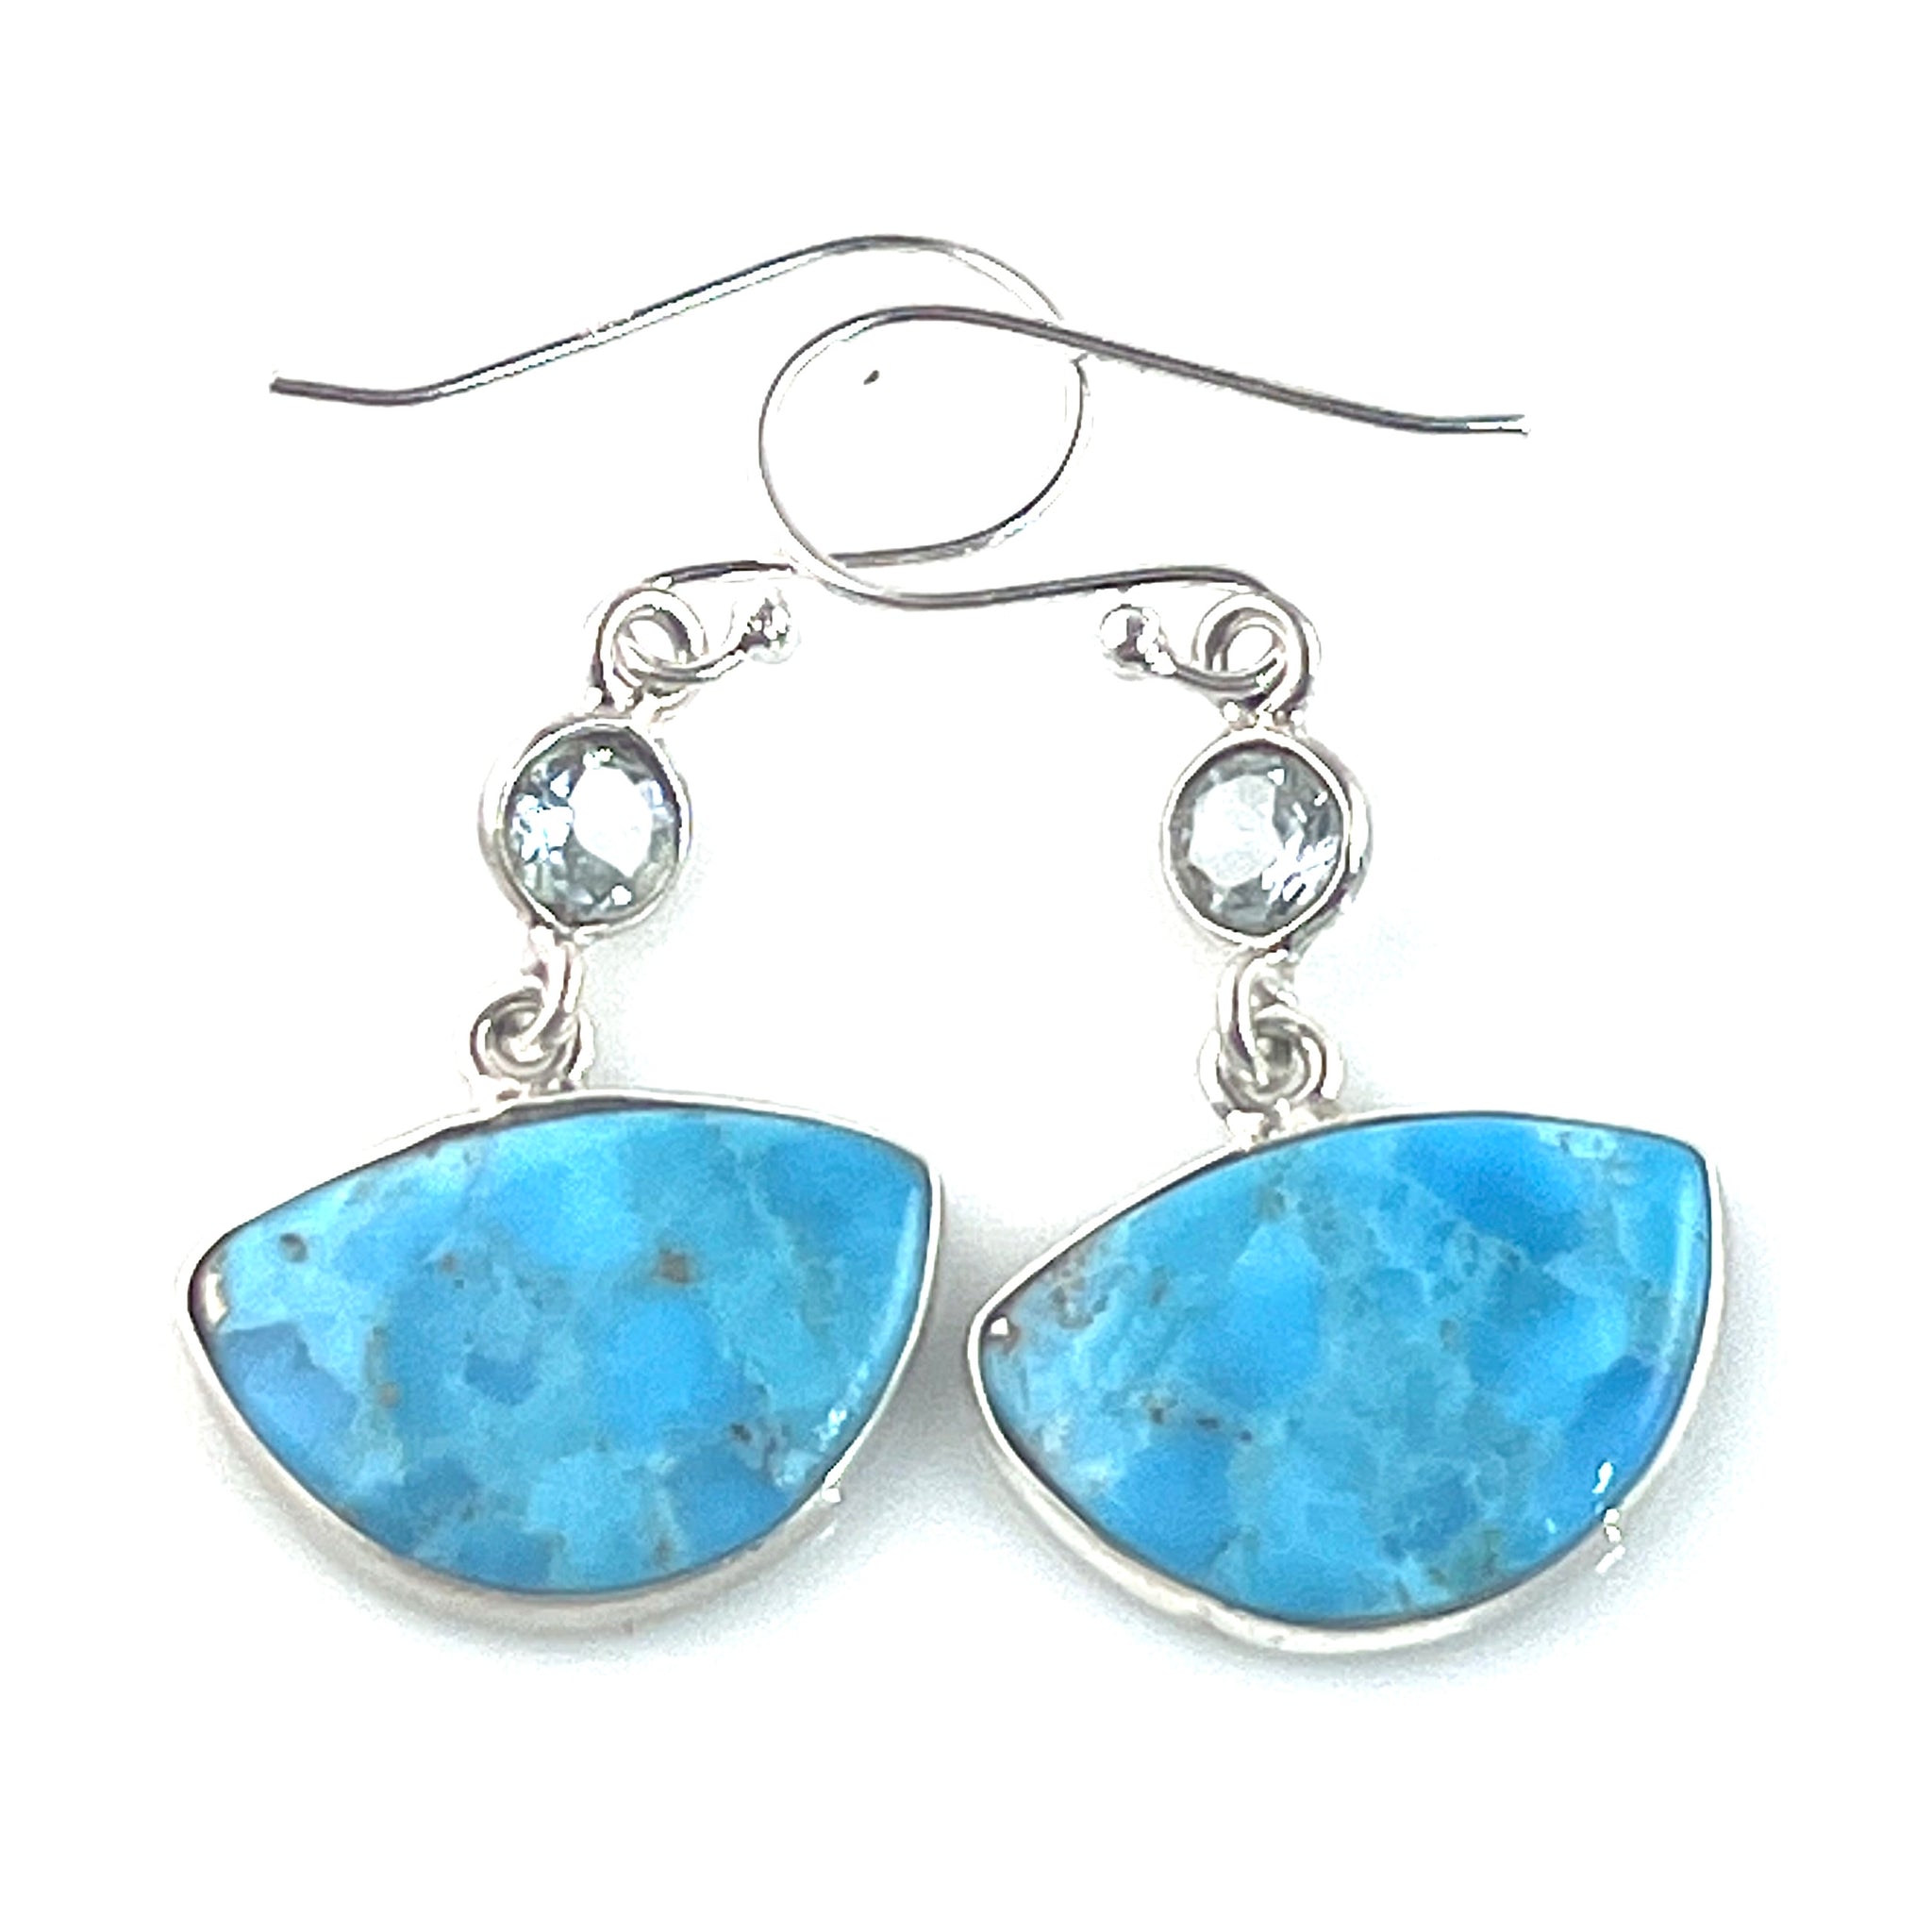 Blue Topaz & Turquoise Sterling Silver Earrings - Keja Designs Jewelry